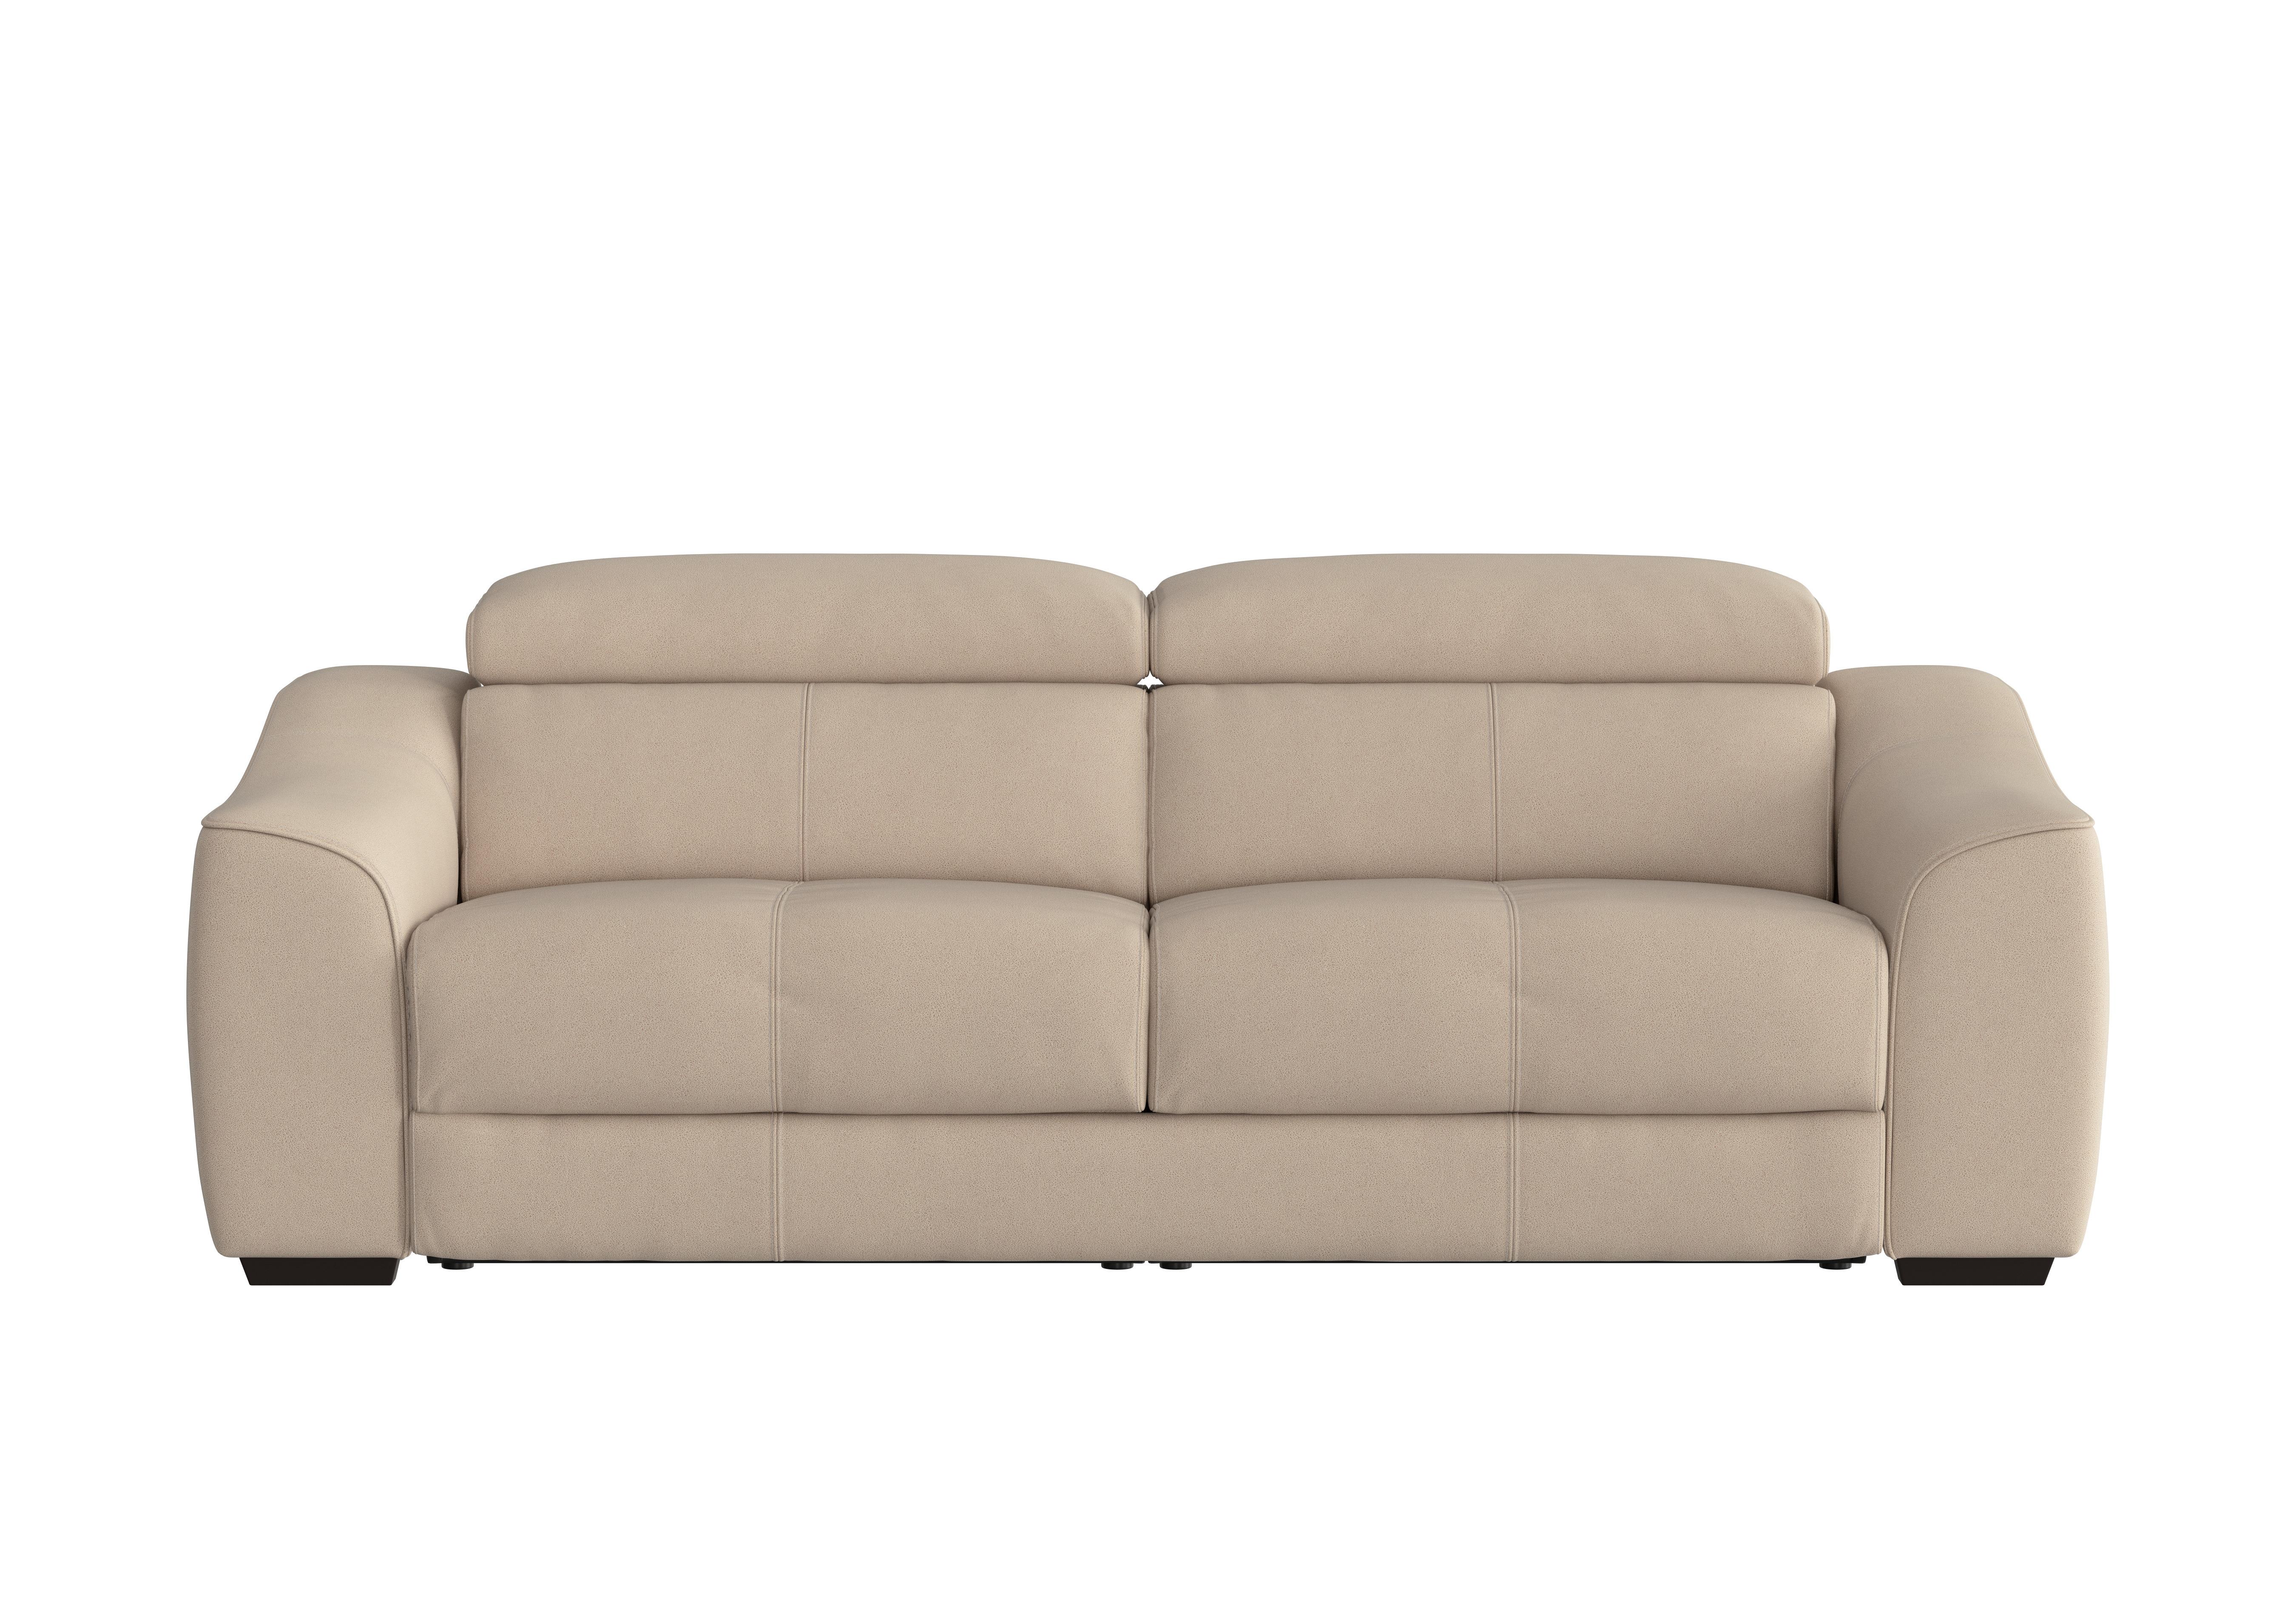 Elixir 3 Seater Fabric Sofa Bed in Bfa-Blj-R20 Bisque on Furniture Village